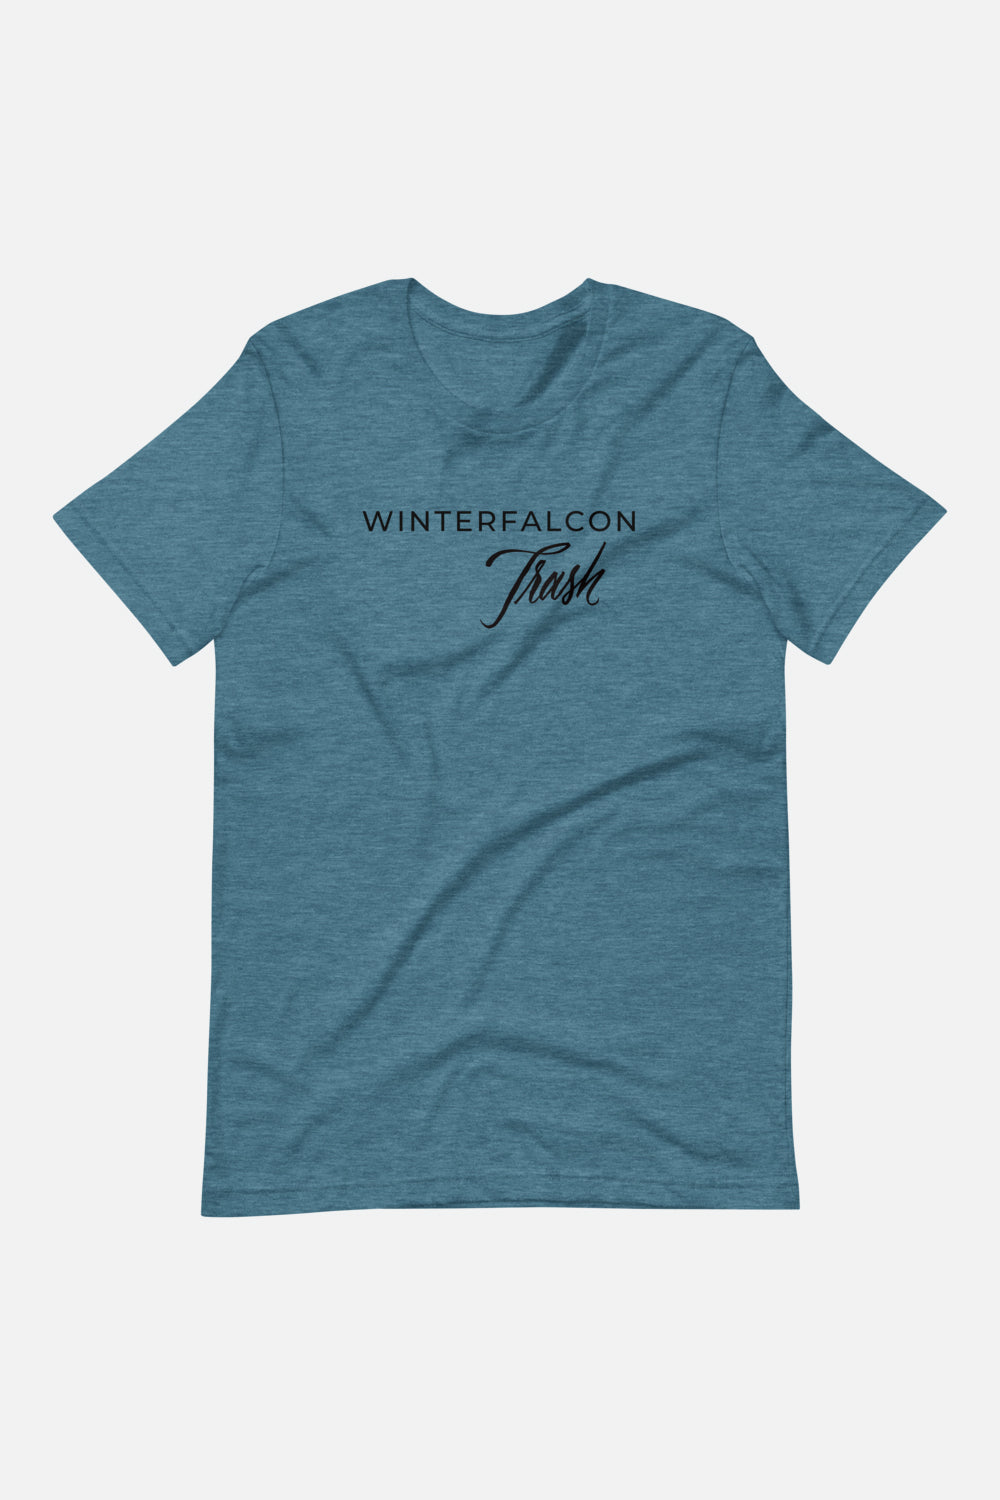 WinterFalcon Trash Unisex T-Shirt